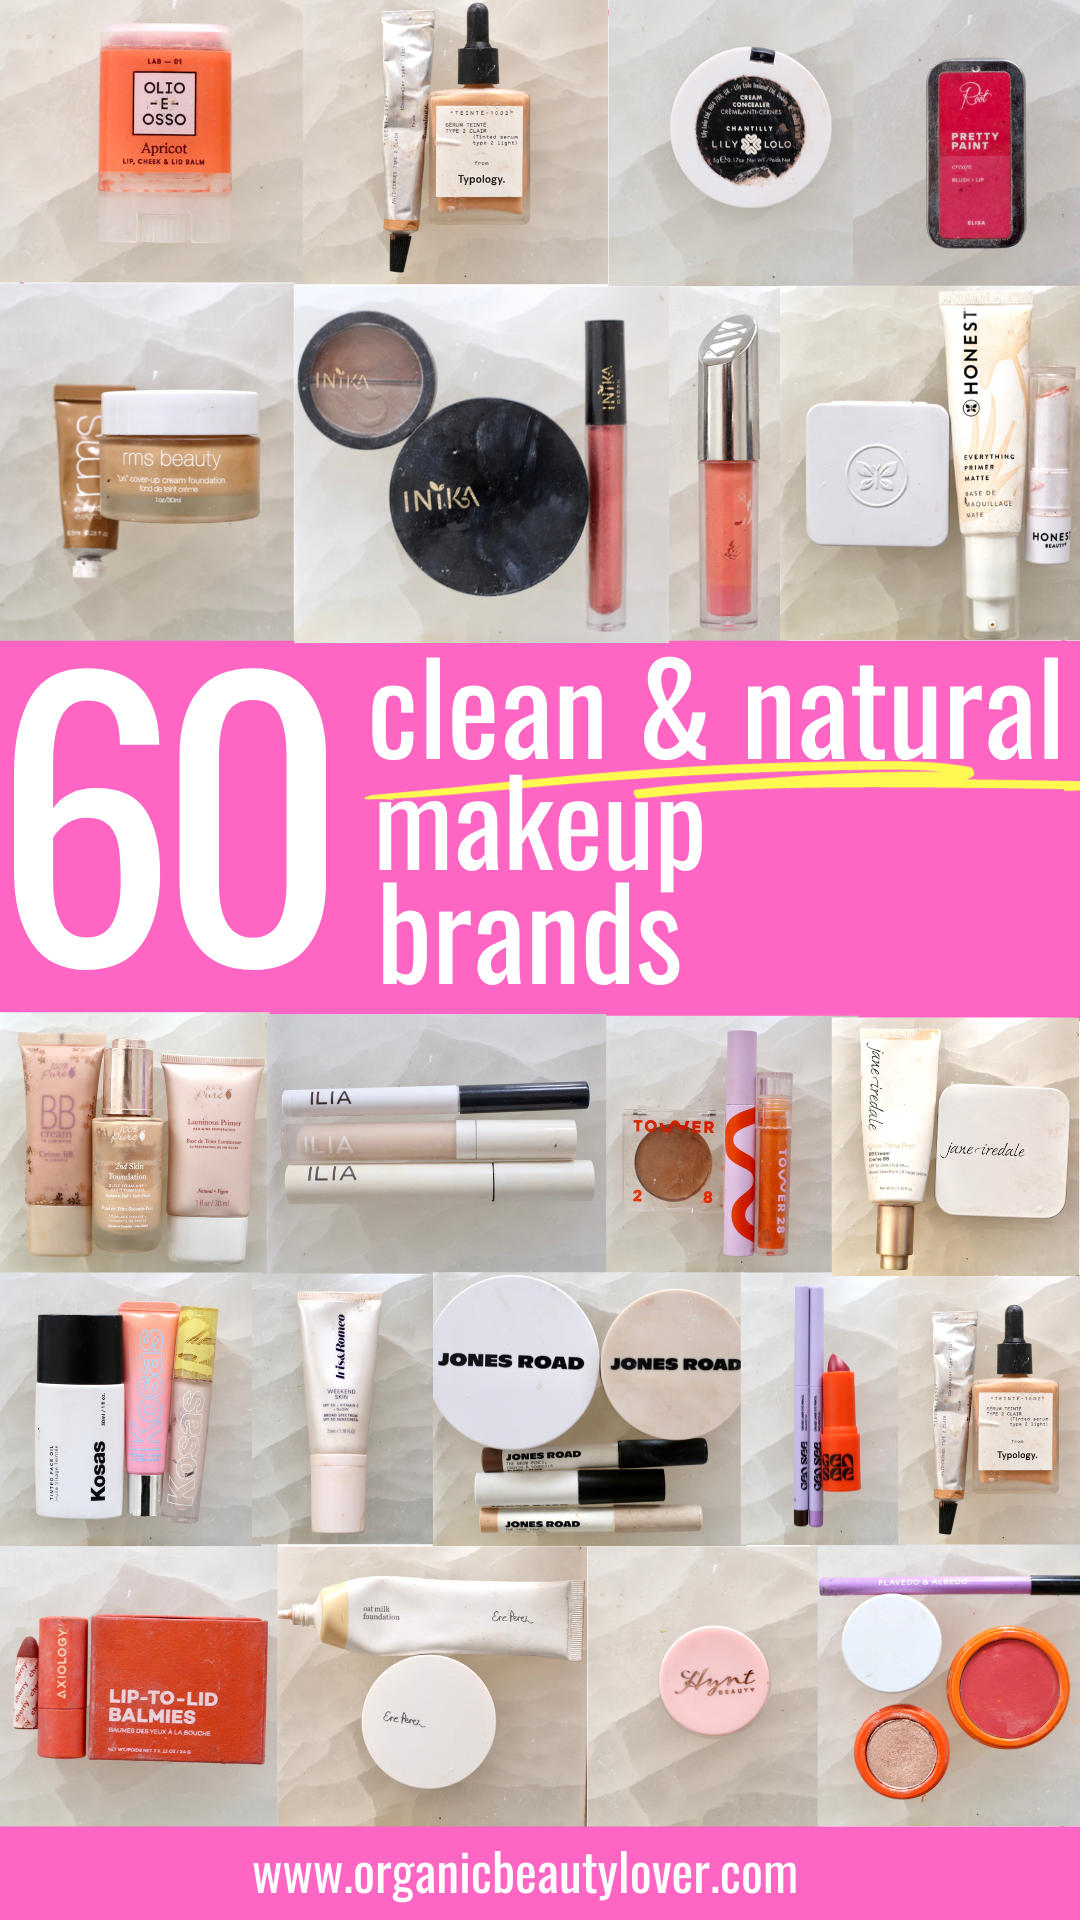 clean makeup brands using organic ingredients